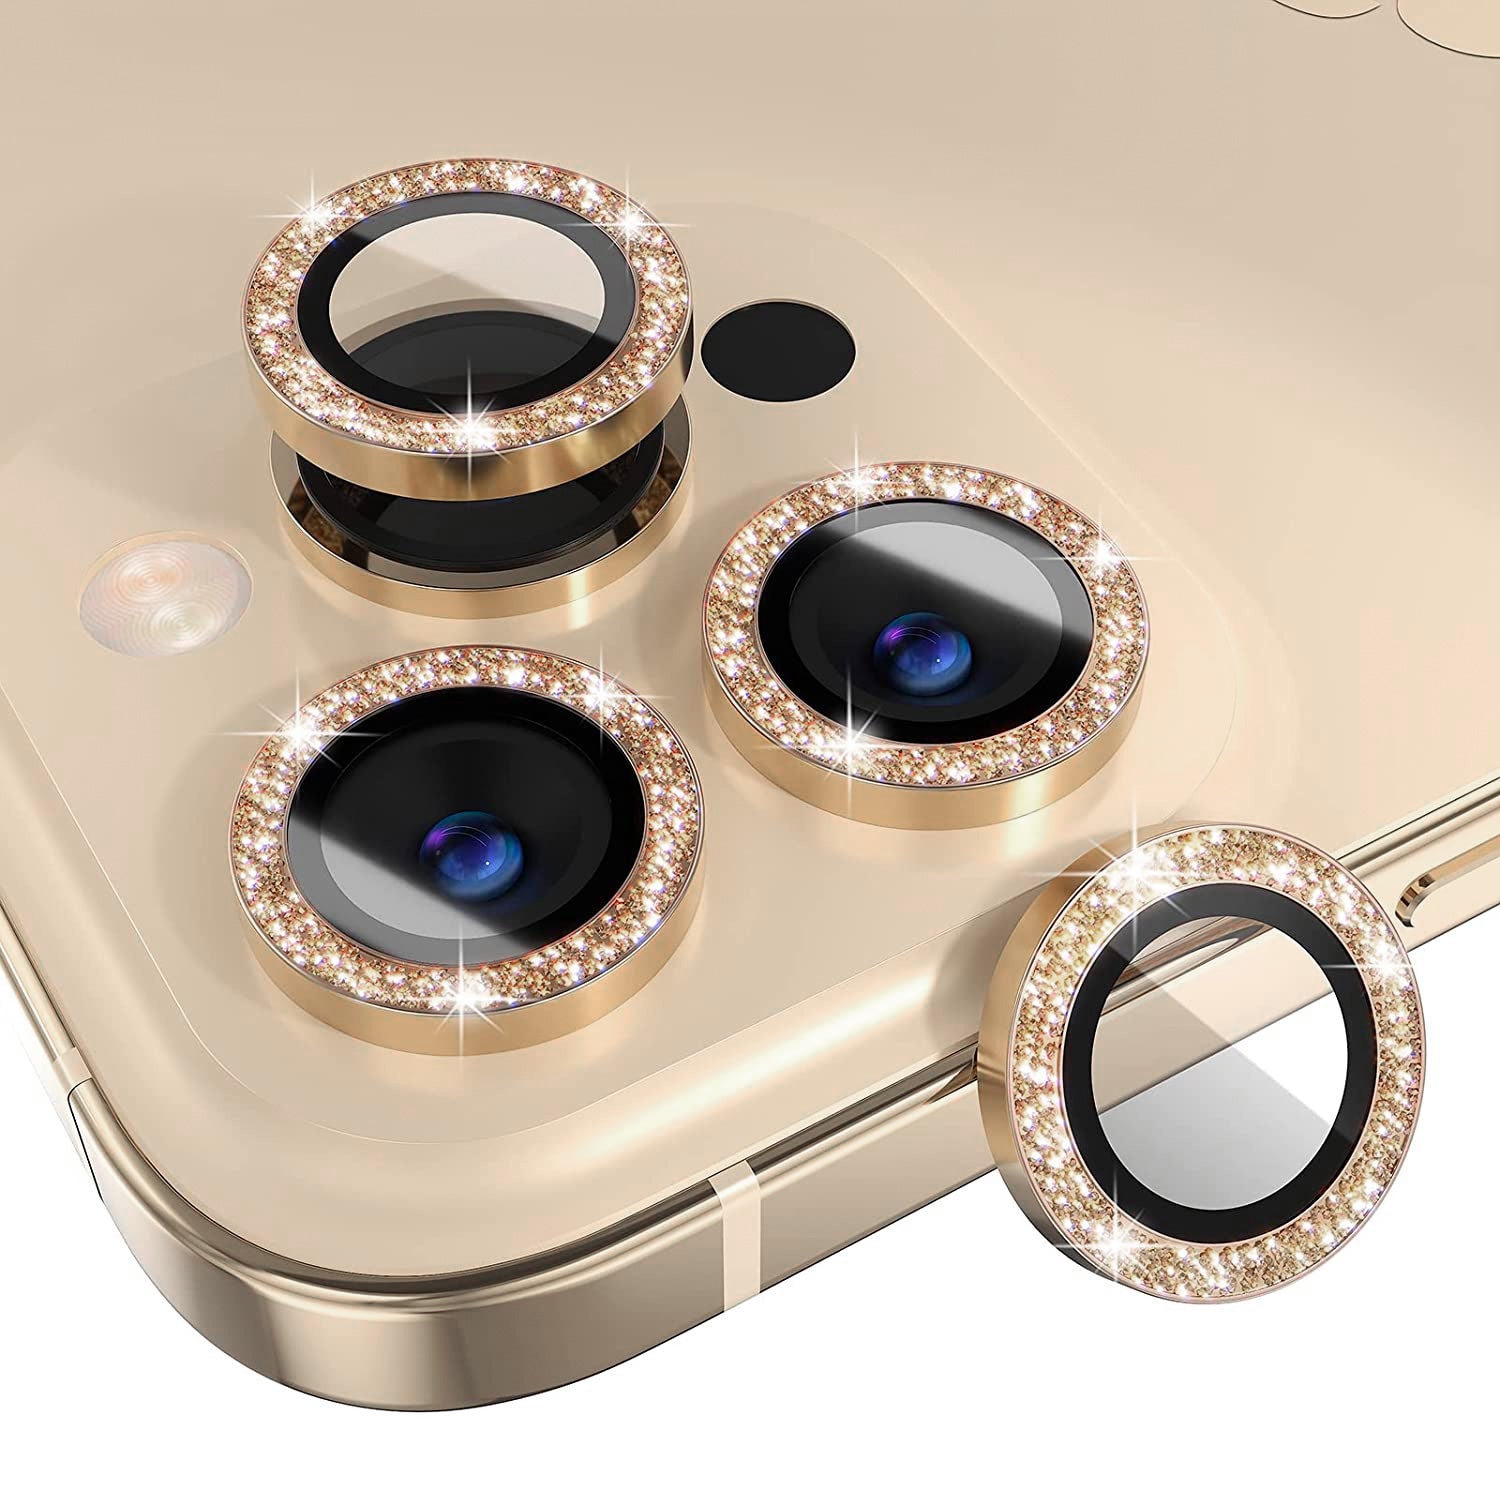 iPhone 14 Pro & Pro Max Camera Lens Protector